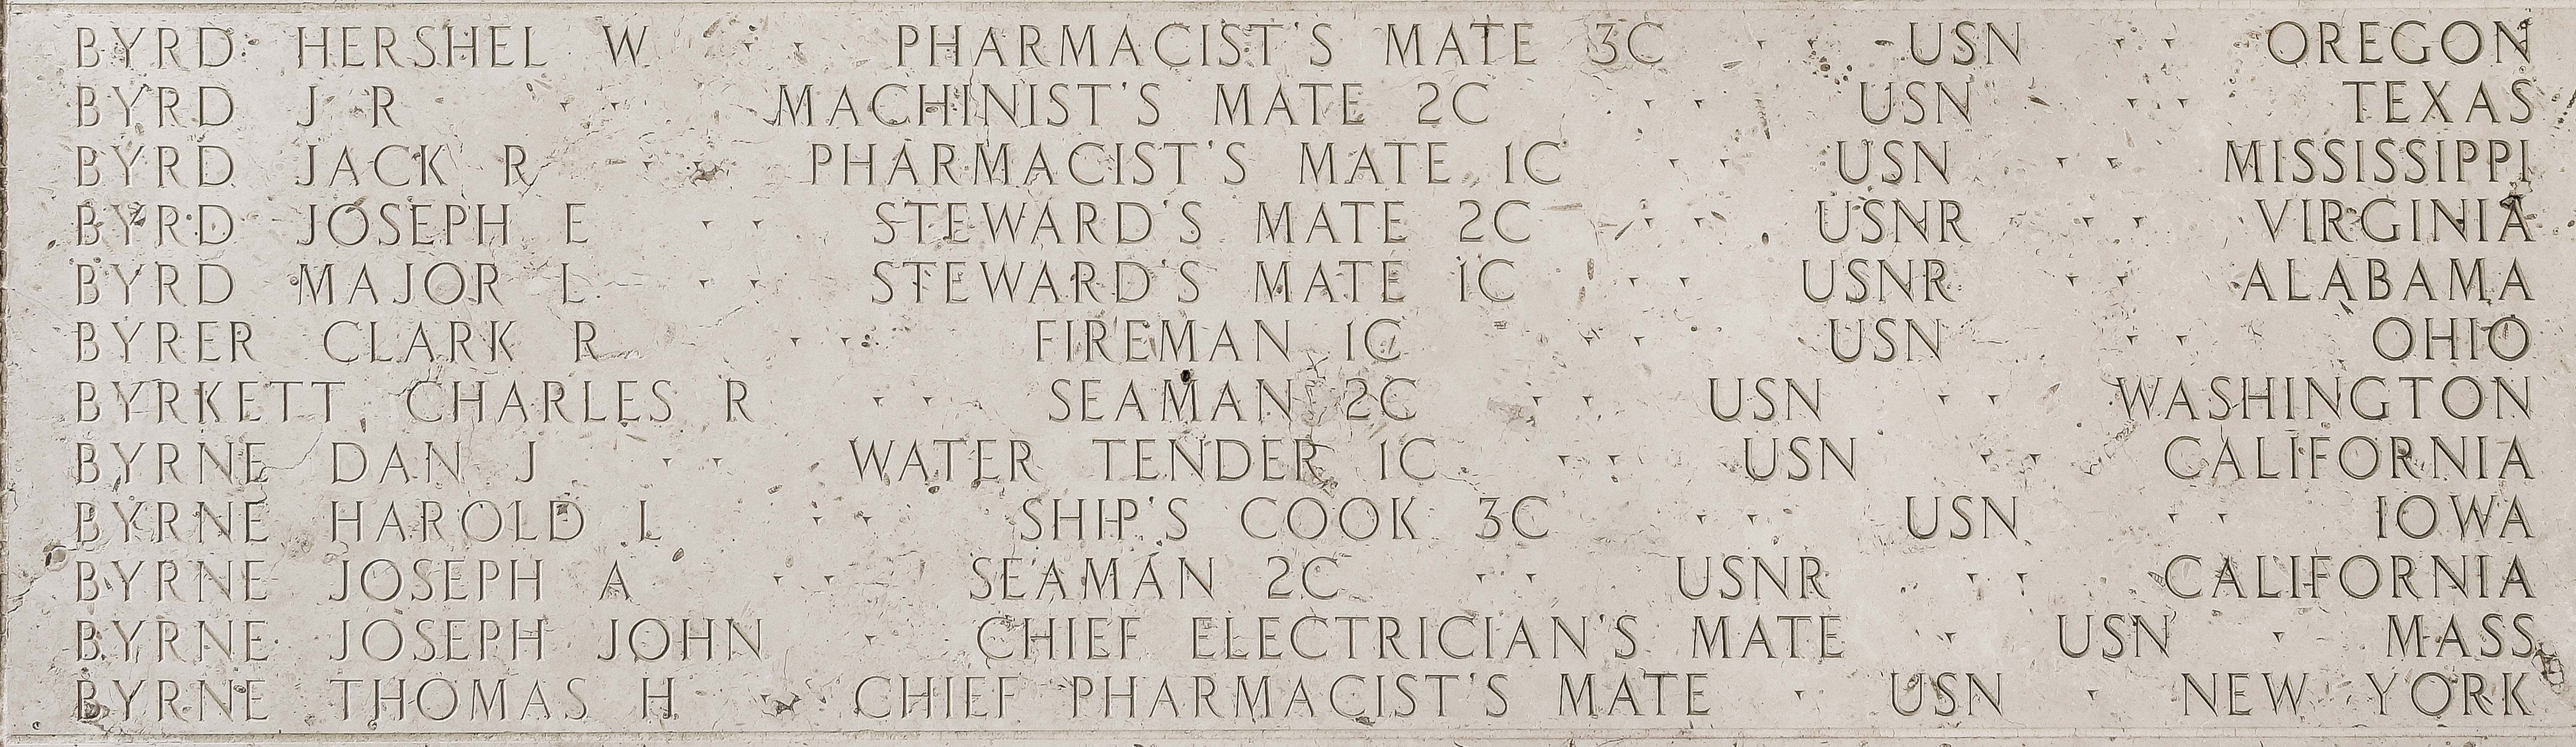 Hershel W. Byrd, Pharmacist's Mate Third Class